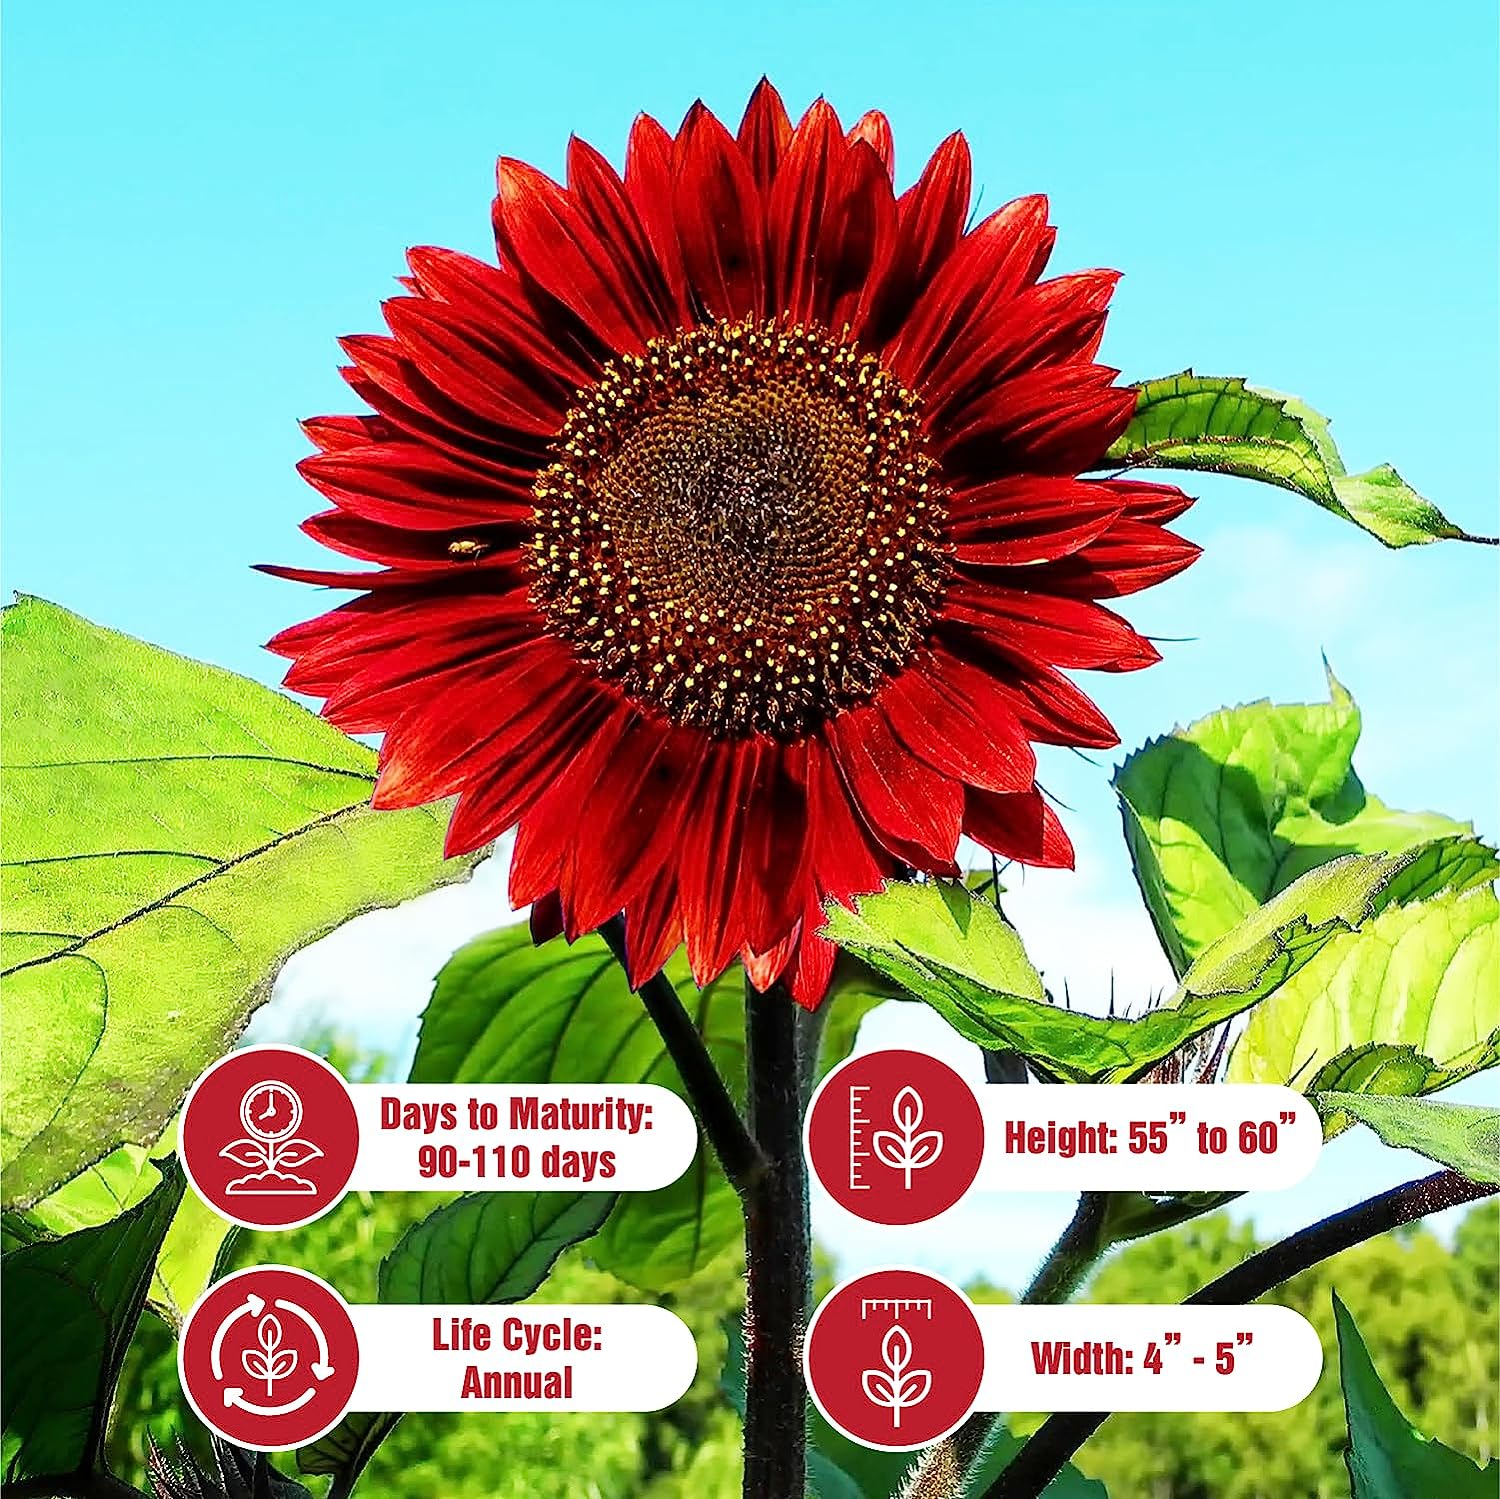 25 Red Velvet Queen Sunflower Seeds – Sunflower Seeds for Planting – Garden Plant – Sunflower Seeds – Garden Seed Sunflower Gifts – Non GMO Heirloom Sun Flower Seeds for Planting Outdoors